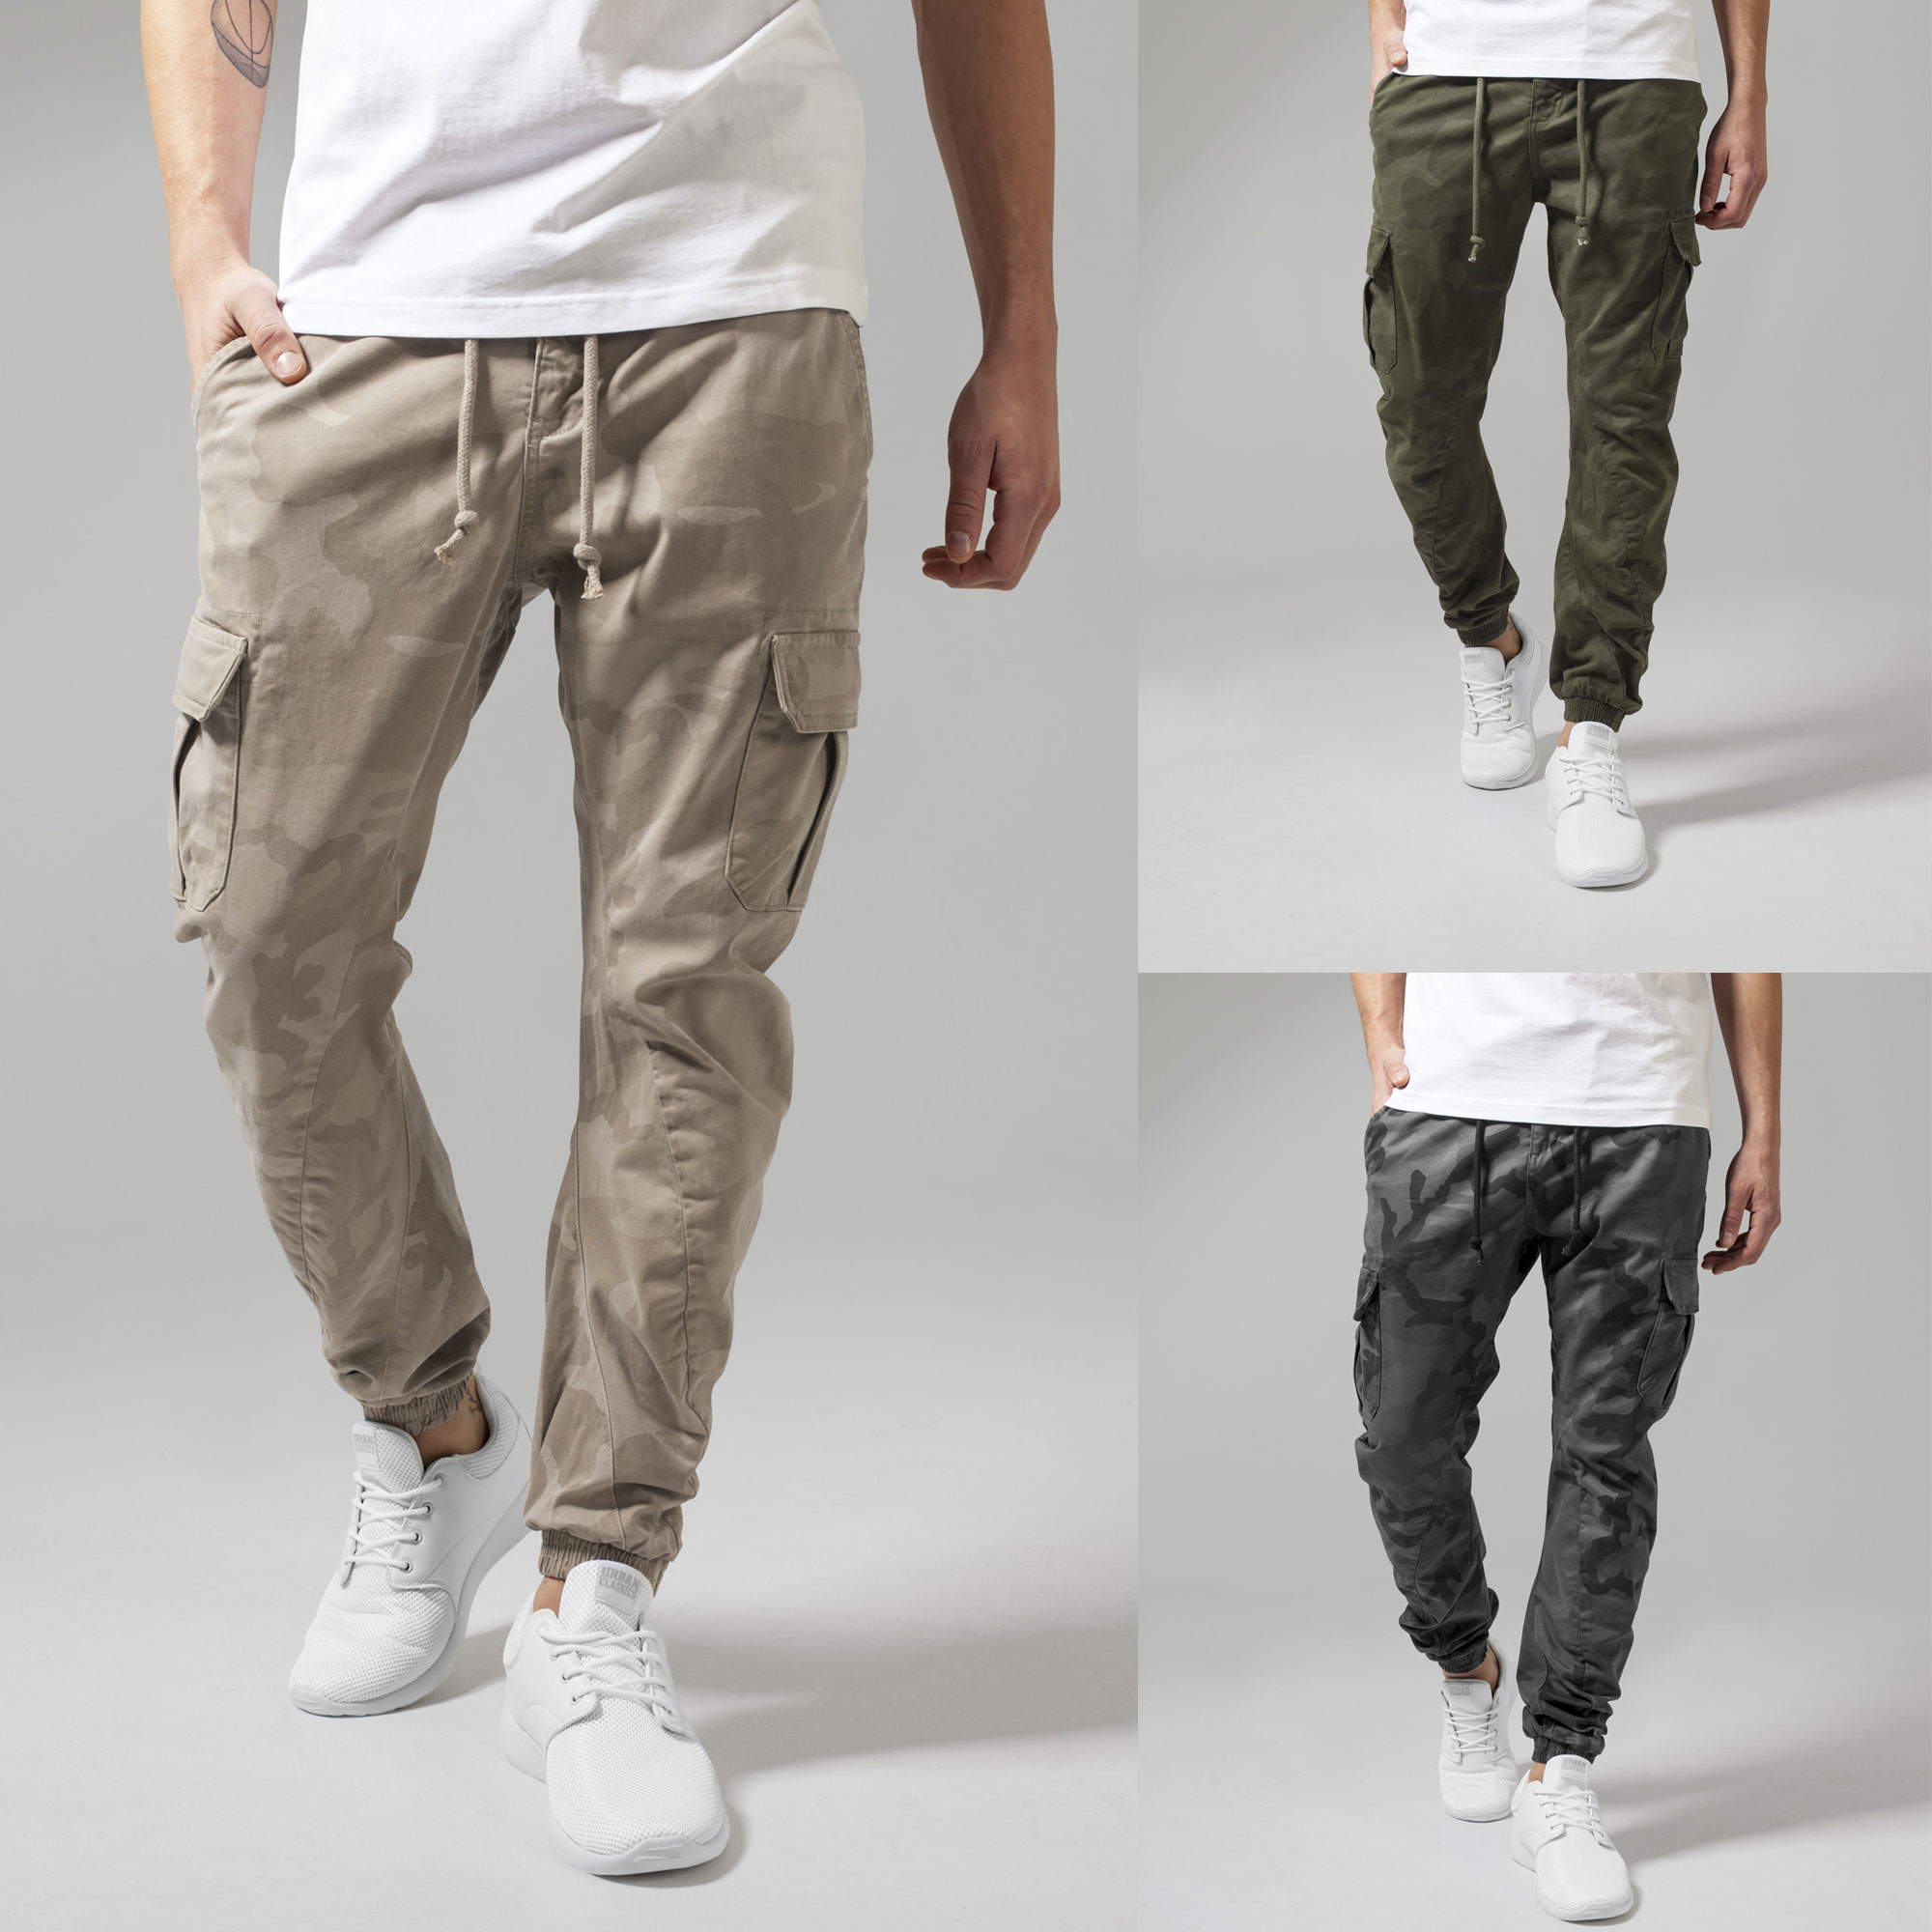 Urban Classics Mens Camo Cargo Pants Tube Pants Jeans Sweatpant Chino  Jogging | eBay